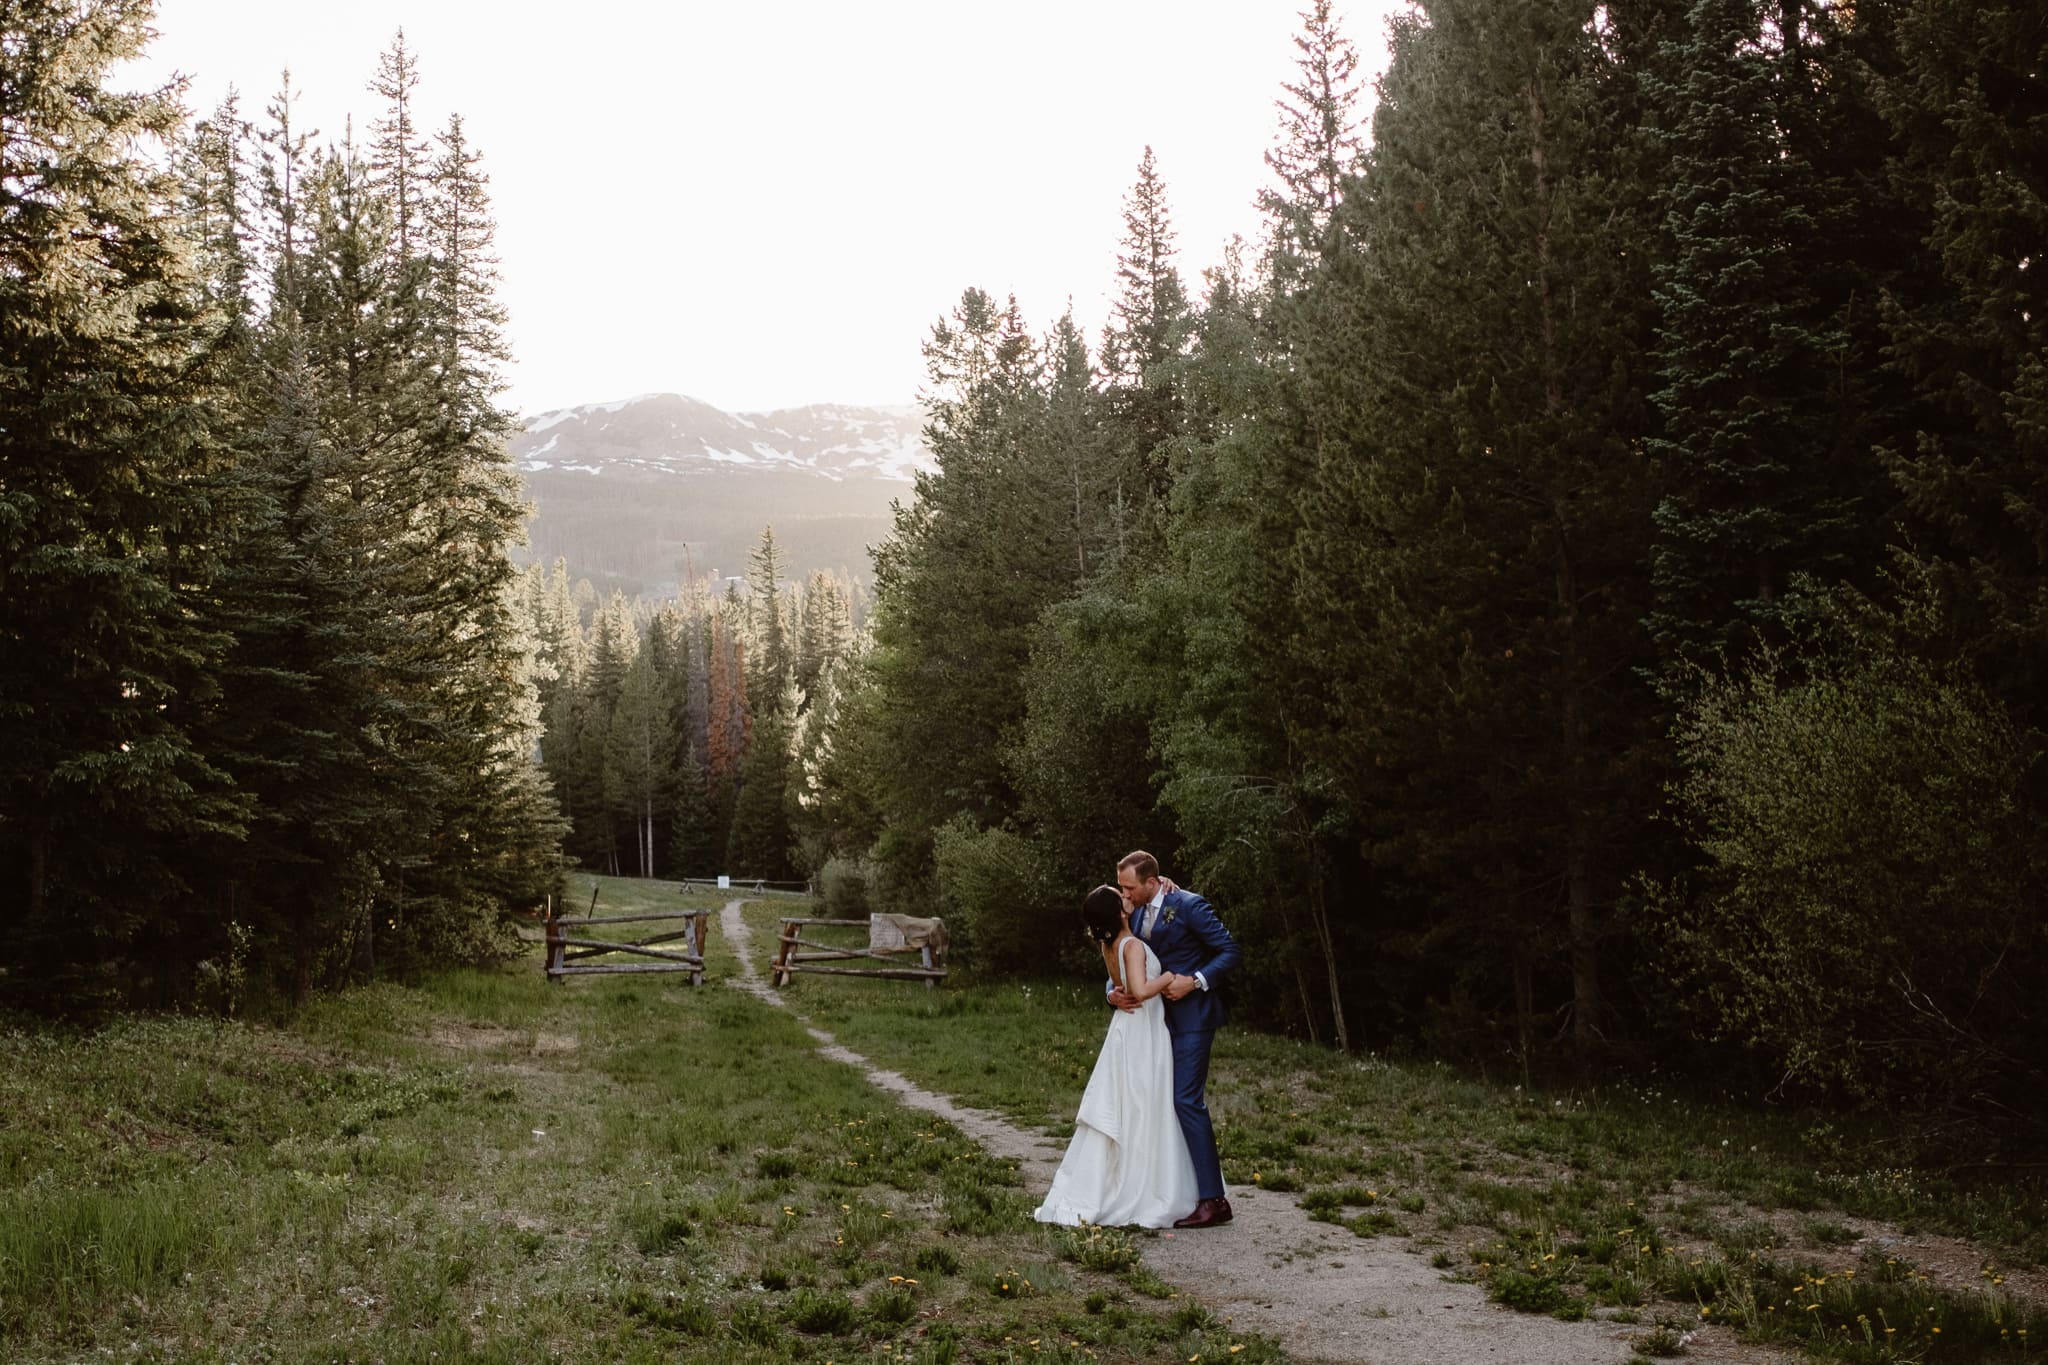 Breckenridge Nordic Center Wedding Photographer, bride and groom portraits in woods at golden hour, Summit County wedding photographer